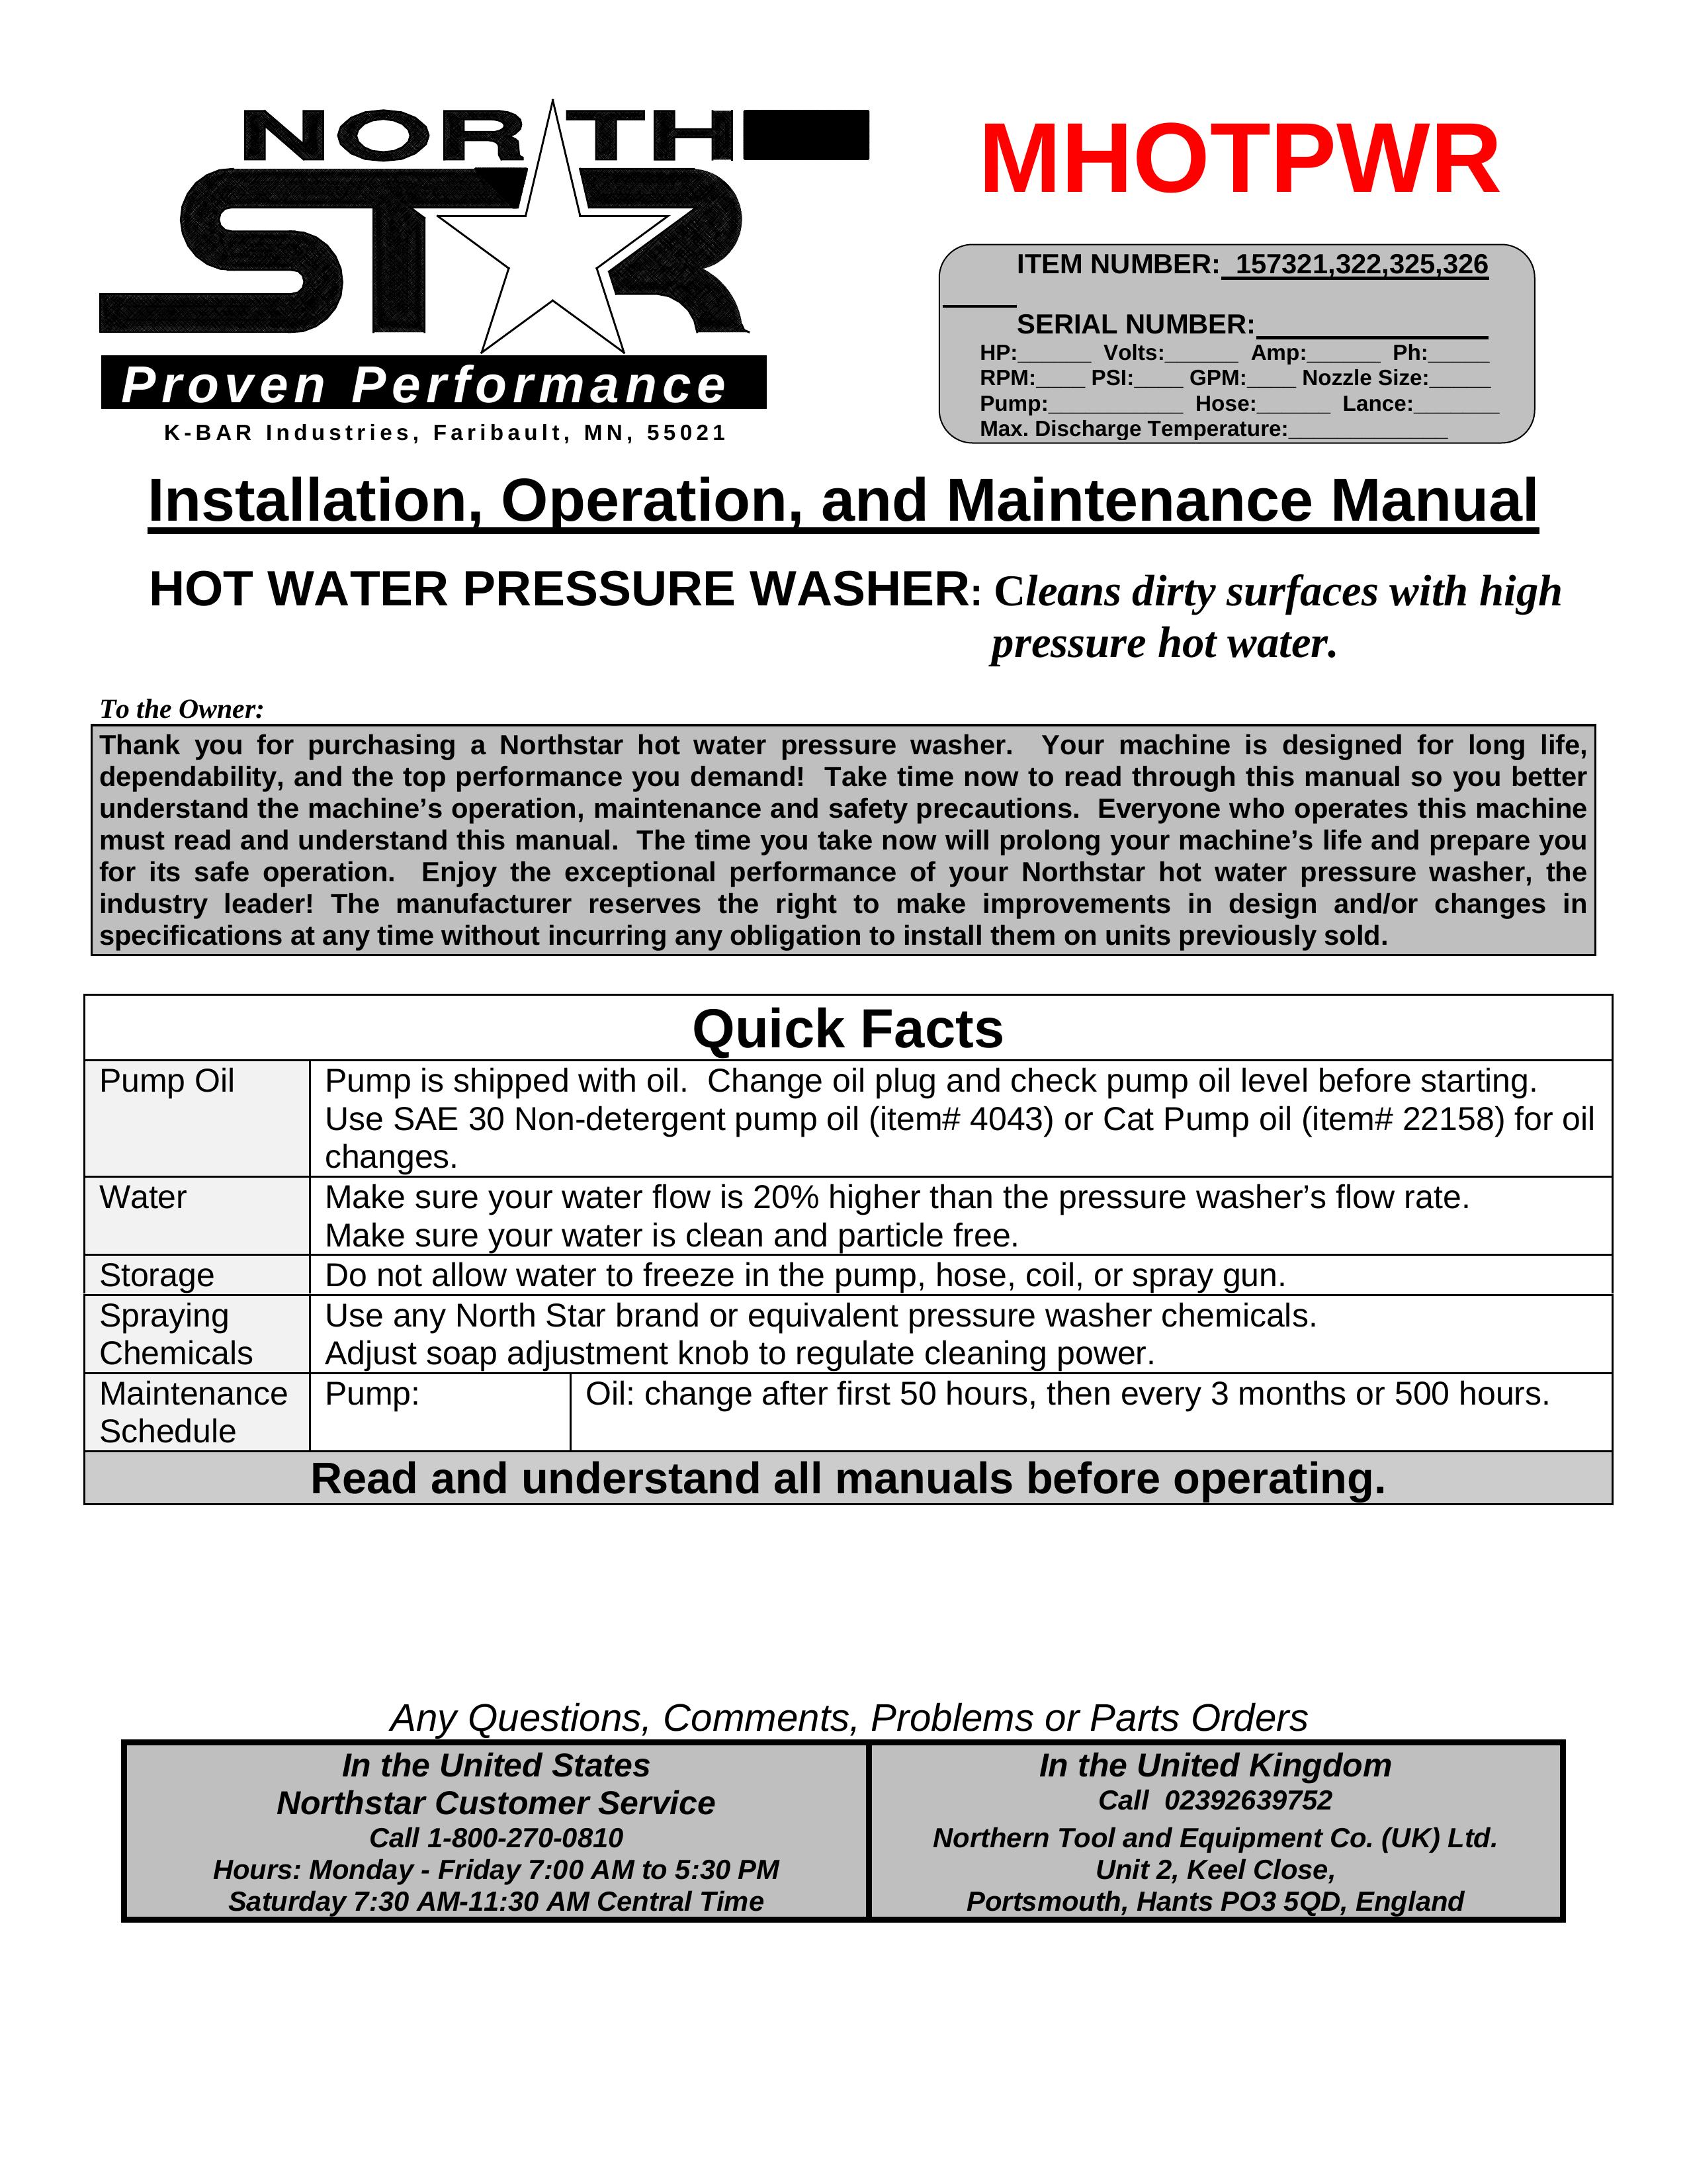 North Star MHOTPWR Pressure Washer User Manual